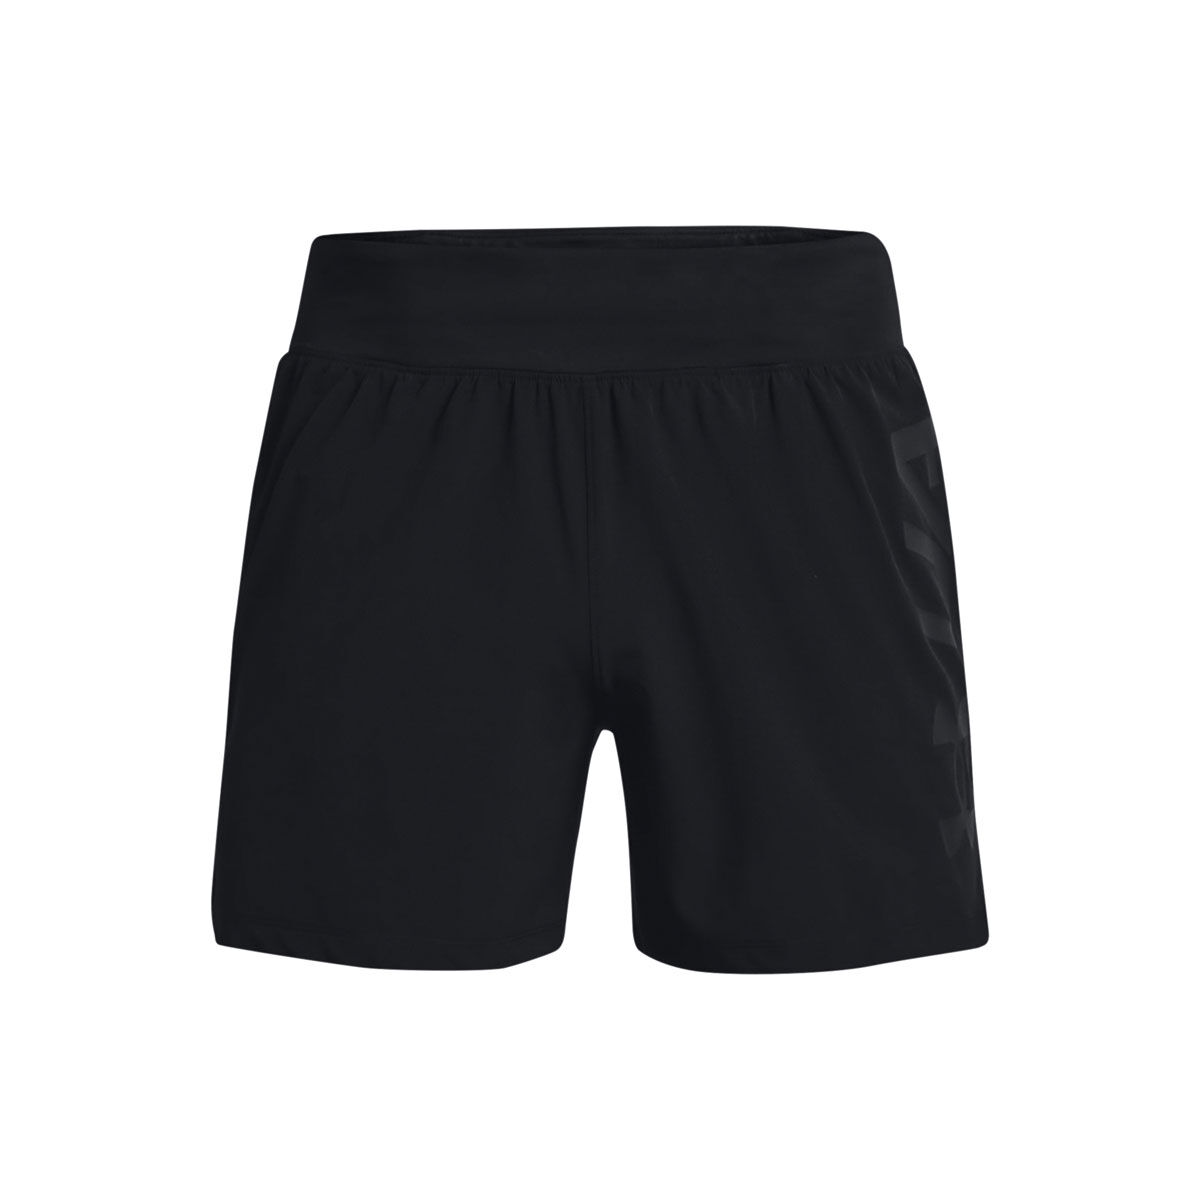 relayinert Running Shorts Men 5 inch Pants with Zipper Pocket Waist Band  Sports Trousers Summer Sportswear Bottoms for Fitness Gym Black gray XL 